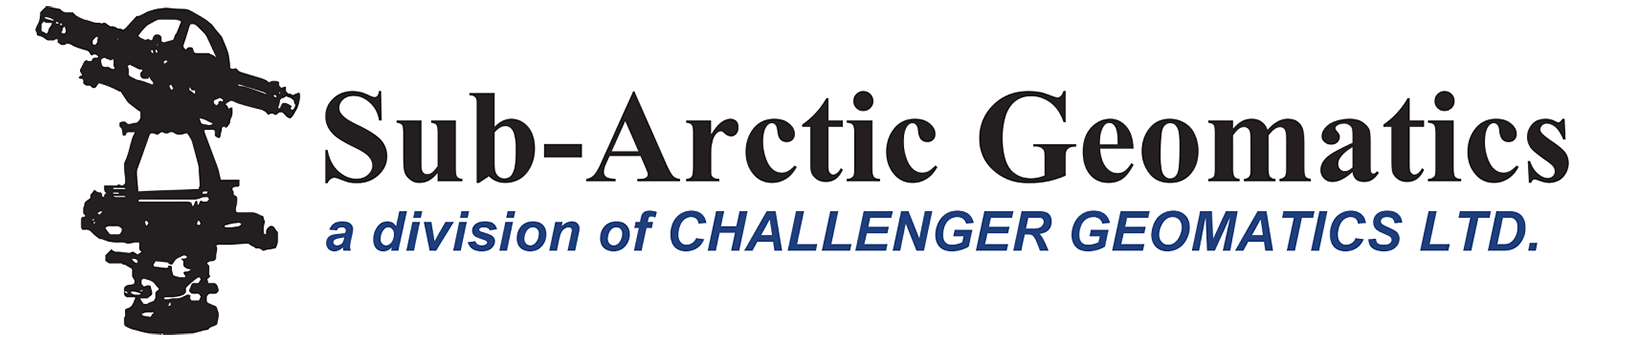 Sub-Arctic Geomatics logo